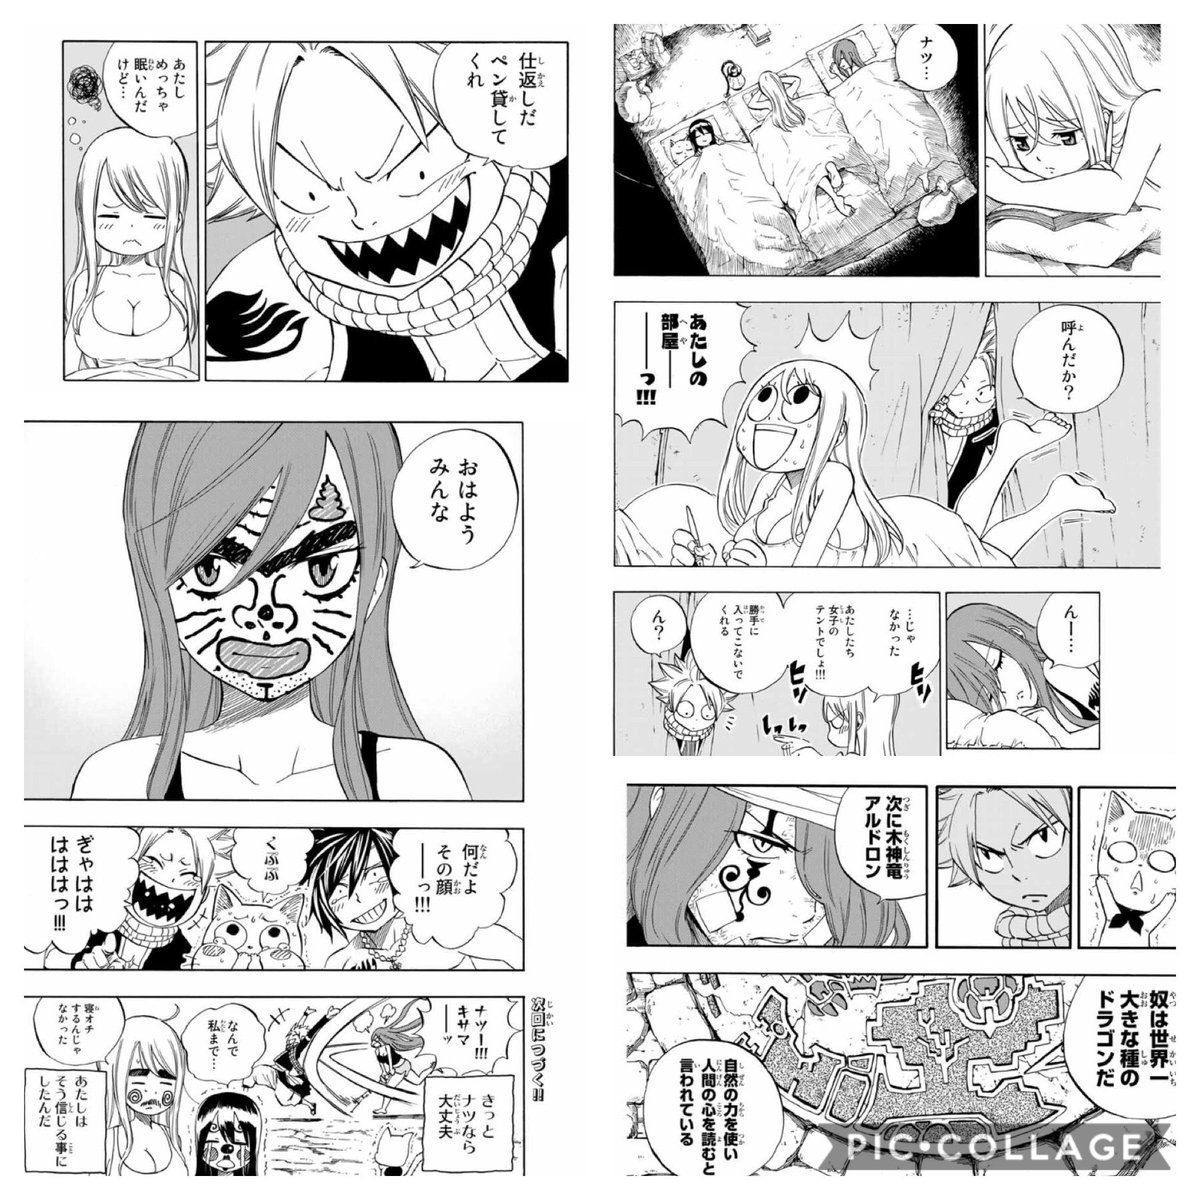 Sakura Mochico低浮上 Sakuramochi Lol さんの漫画 7作目 ツイコミ 仮